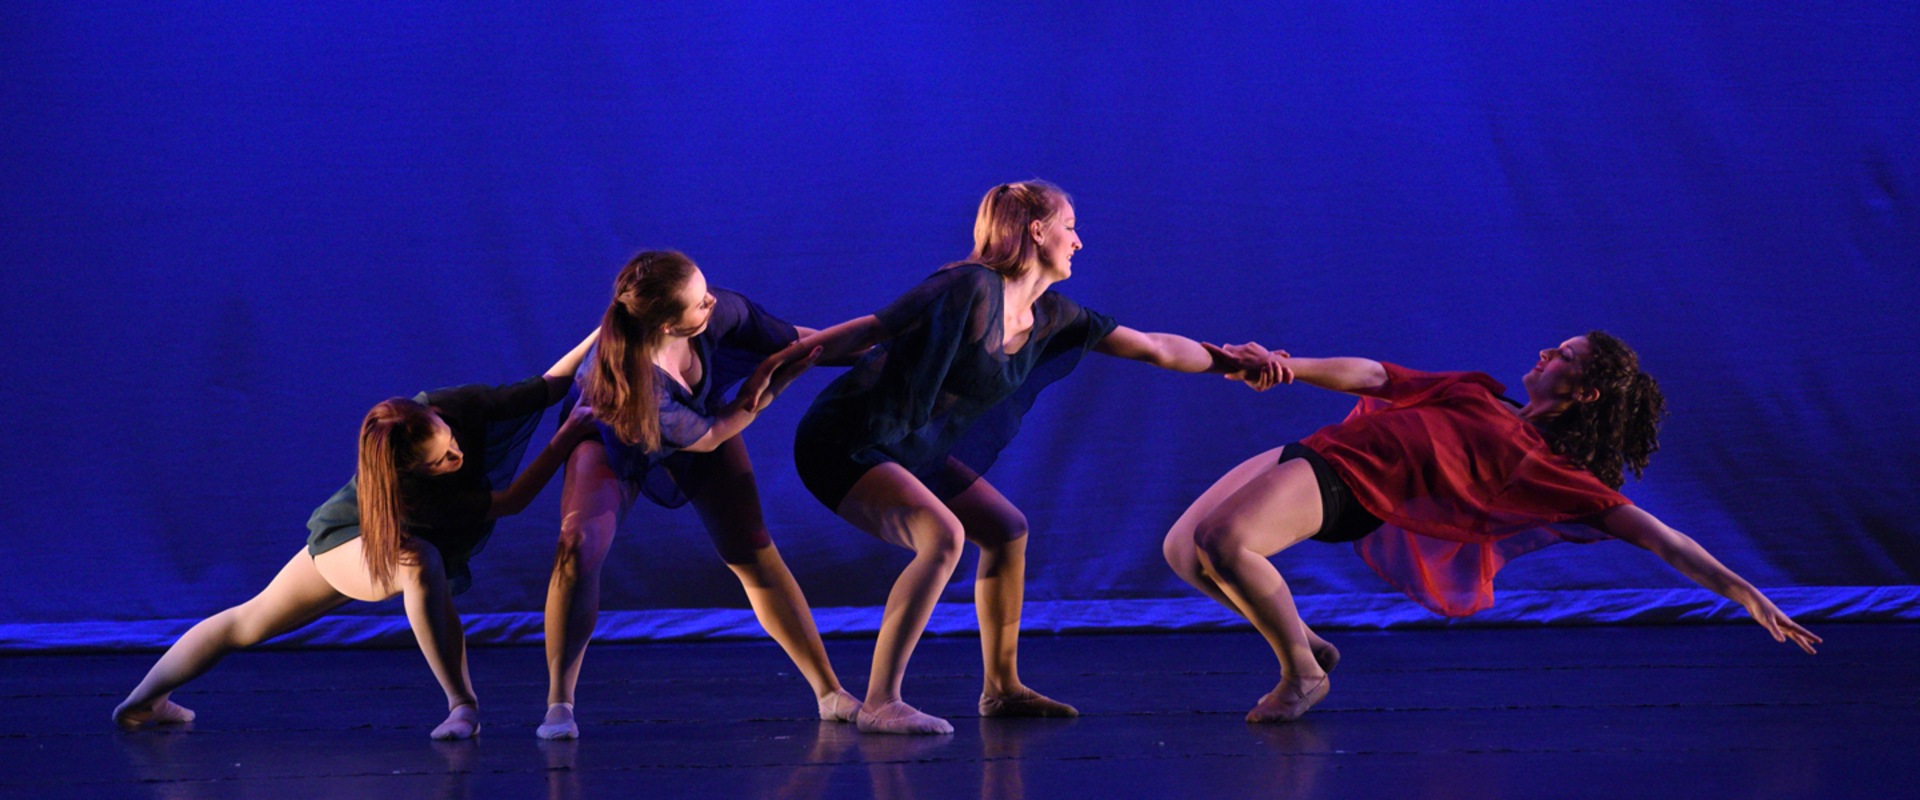 Scholarships for Dance Coalition Members in Northern VA: Unlock Your Potential